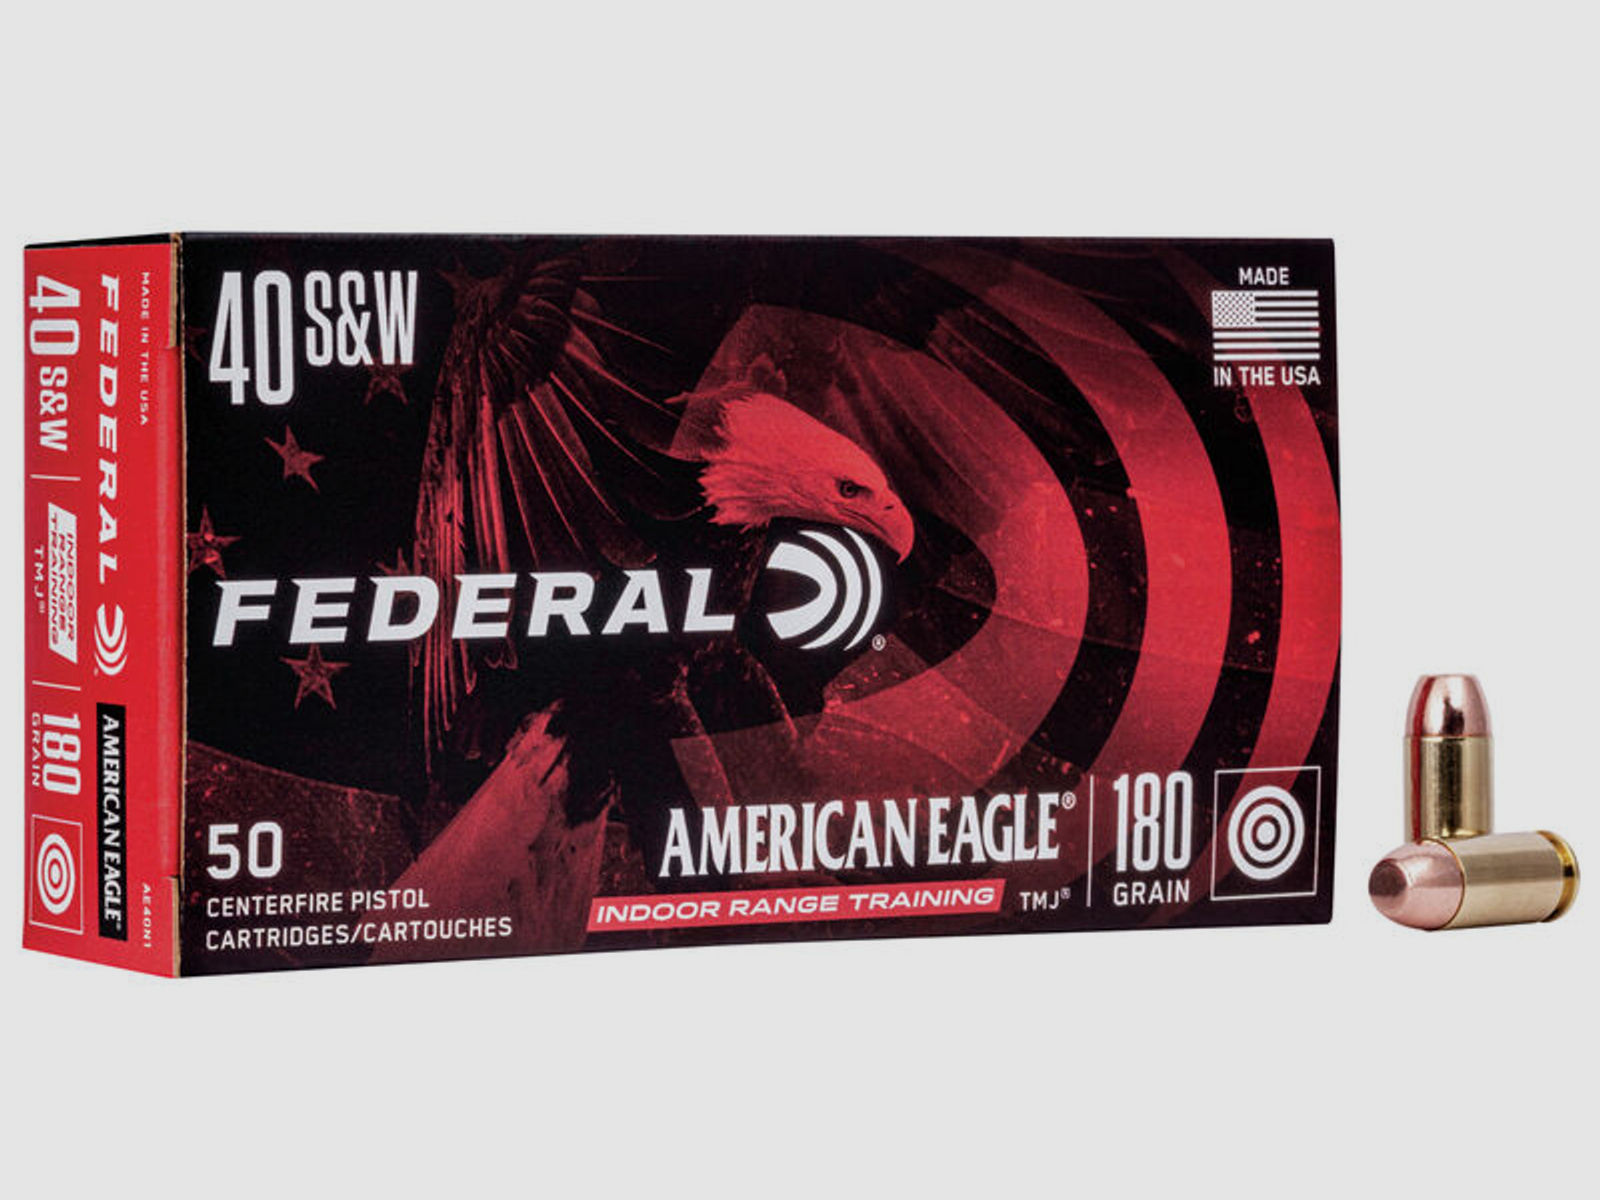 Federal American Eagle Indoor Range Training .40 S&W 180GR TMJ 50 Patronen